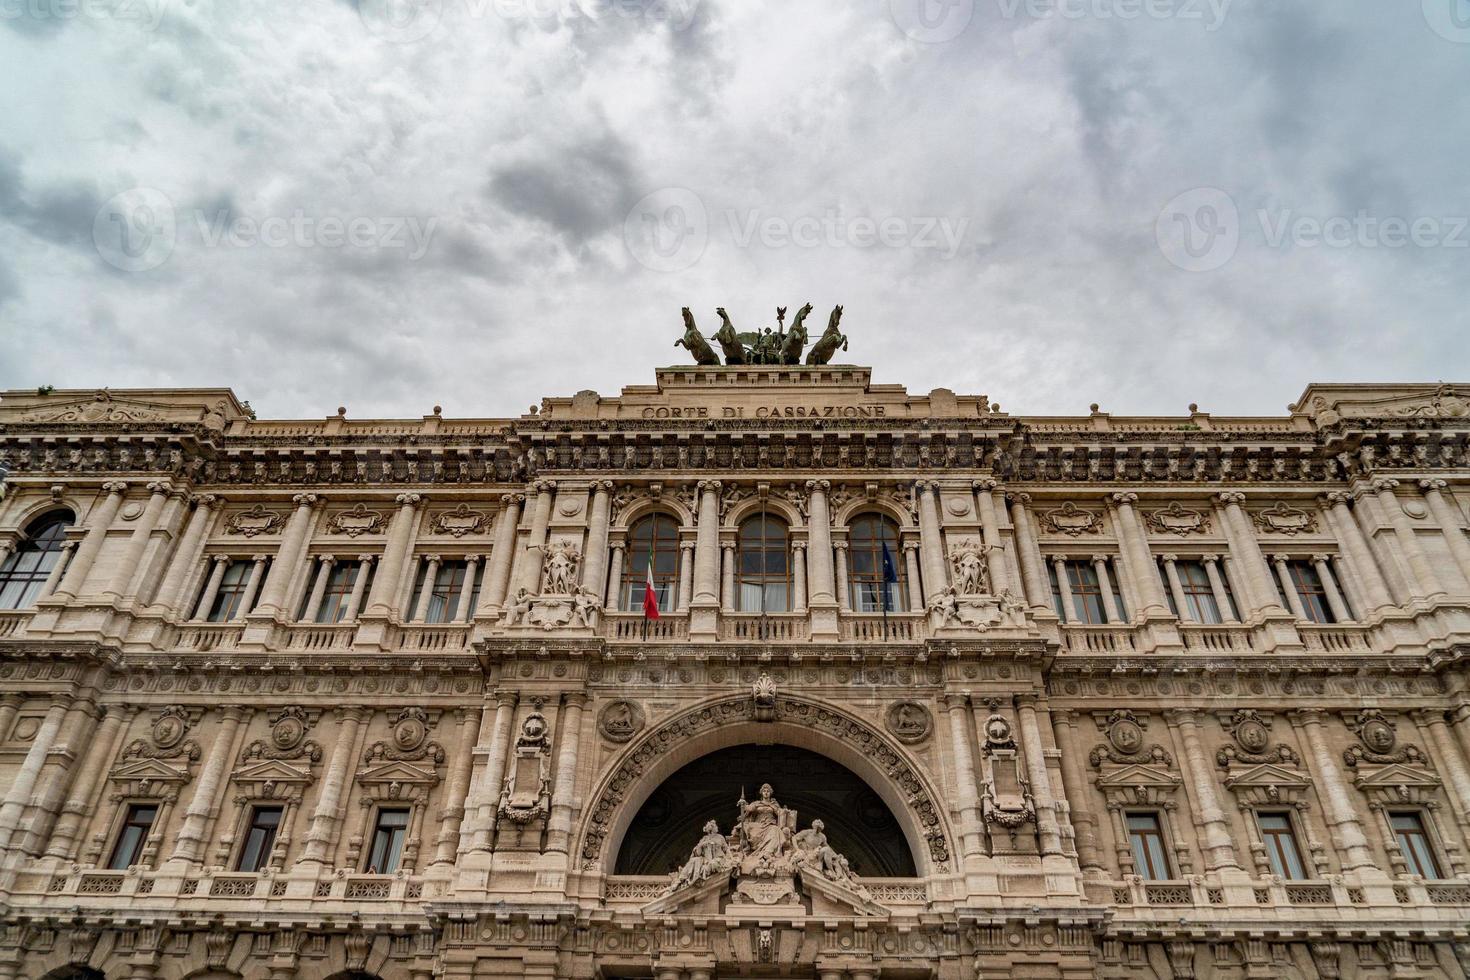 Rome corte di cassazione palace view on cloudy day photo